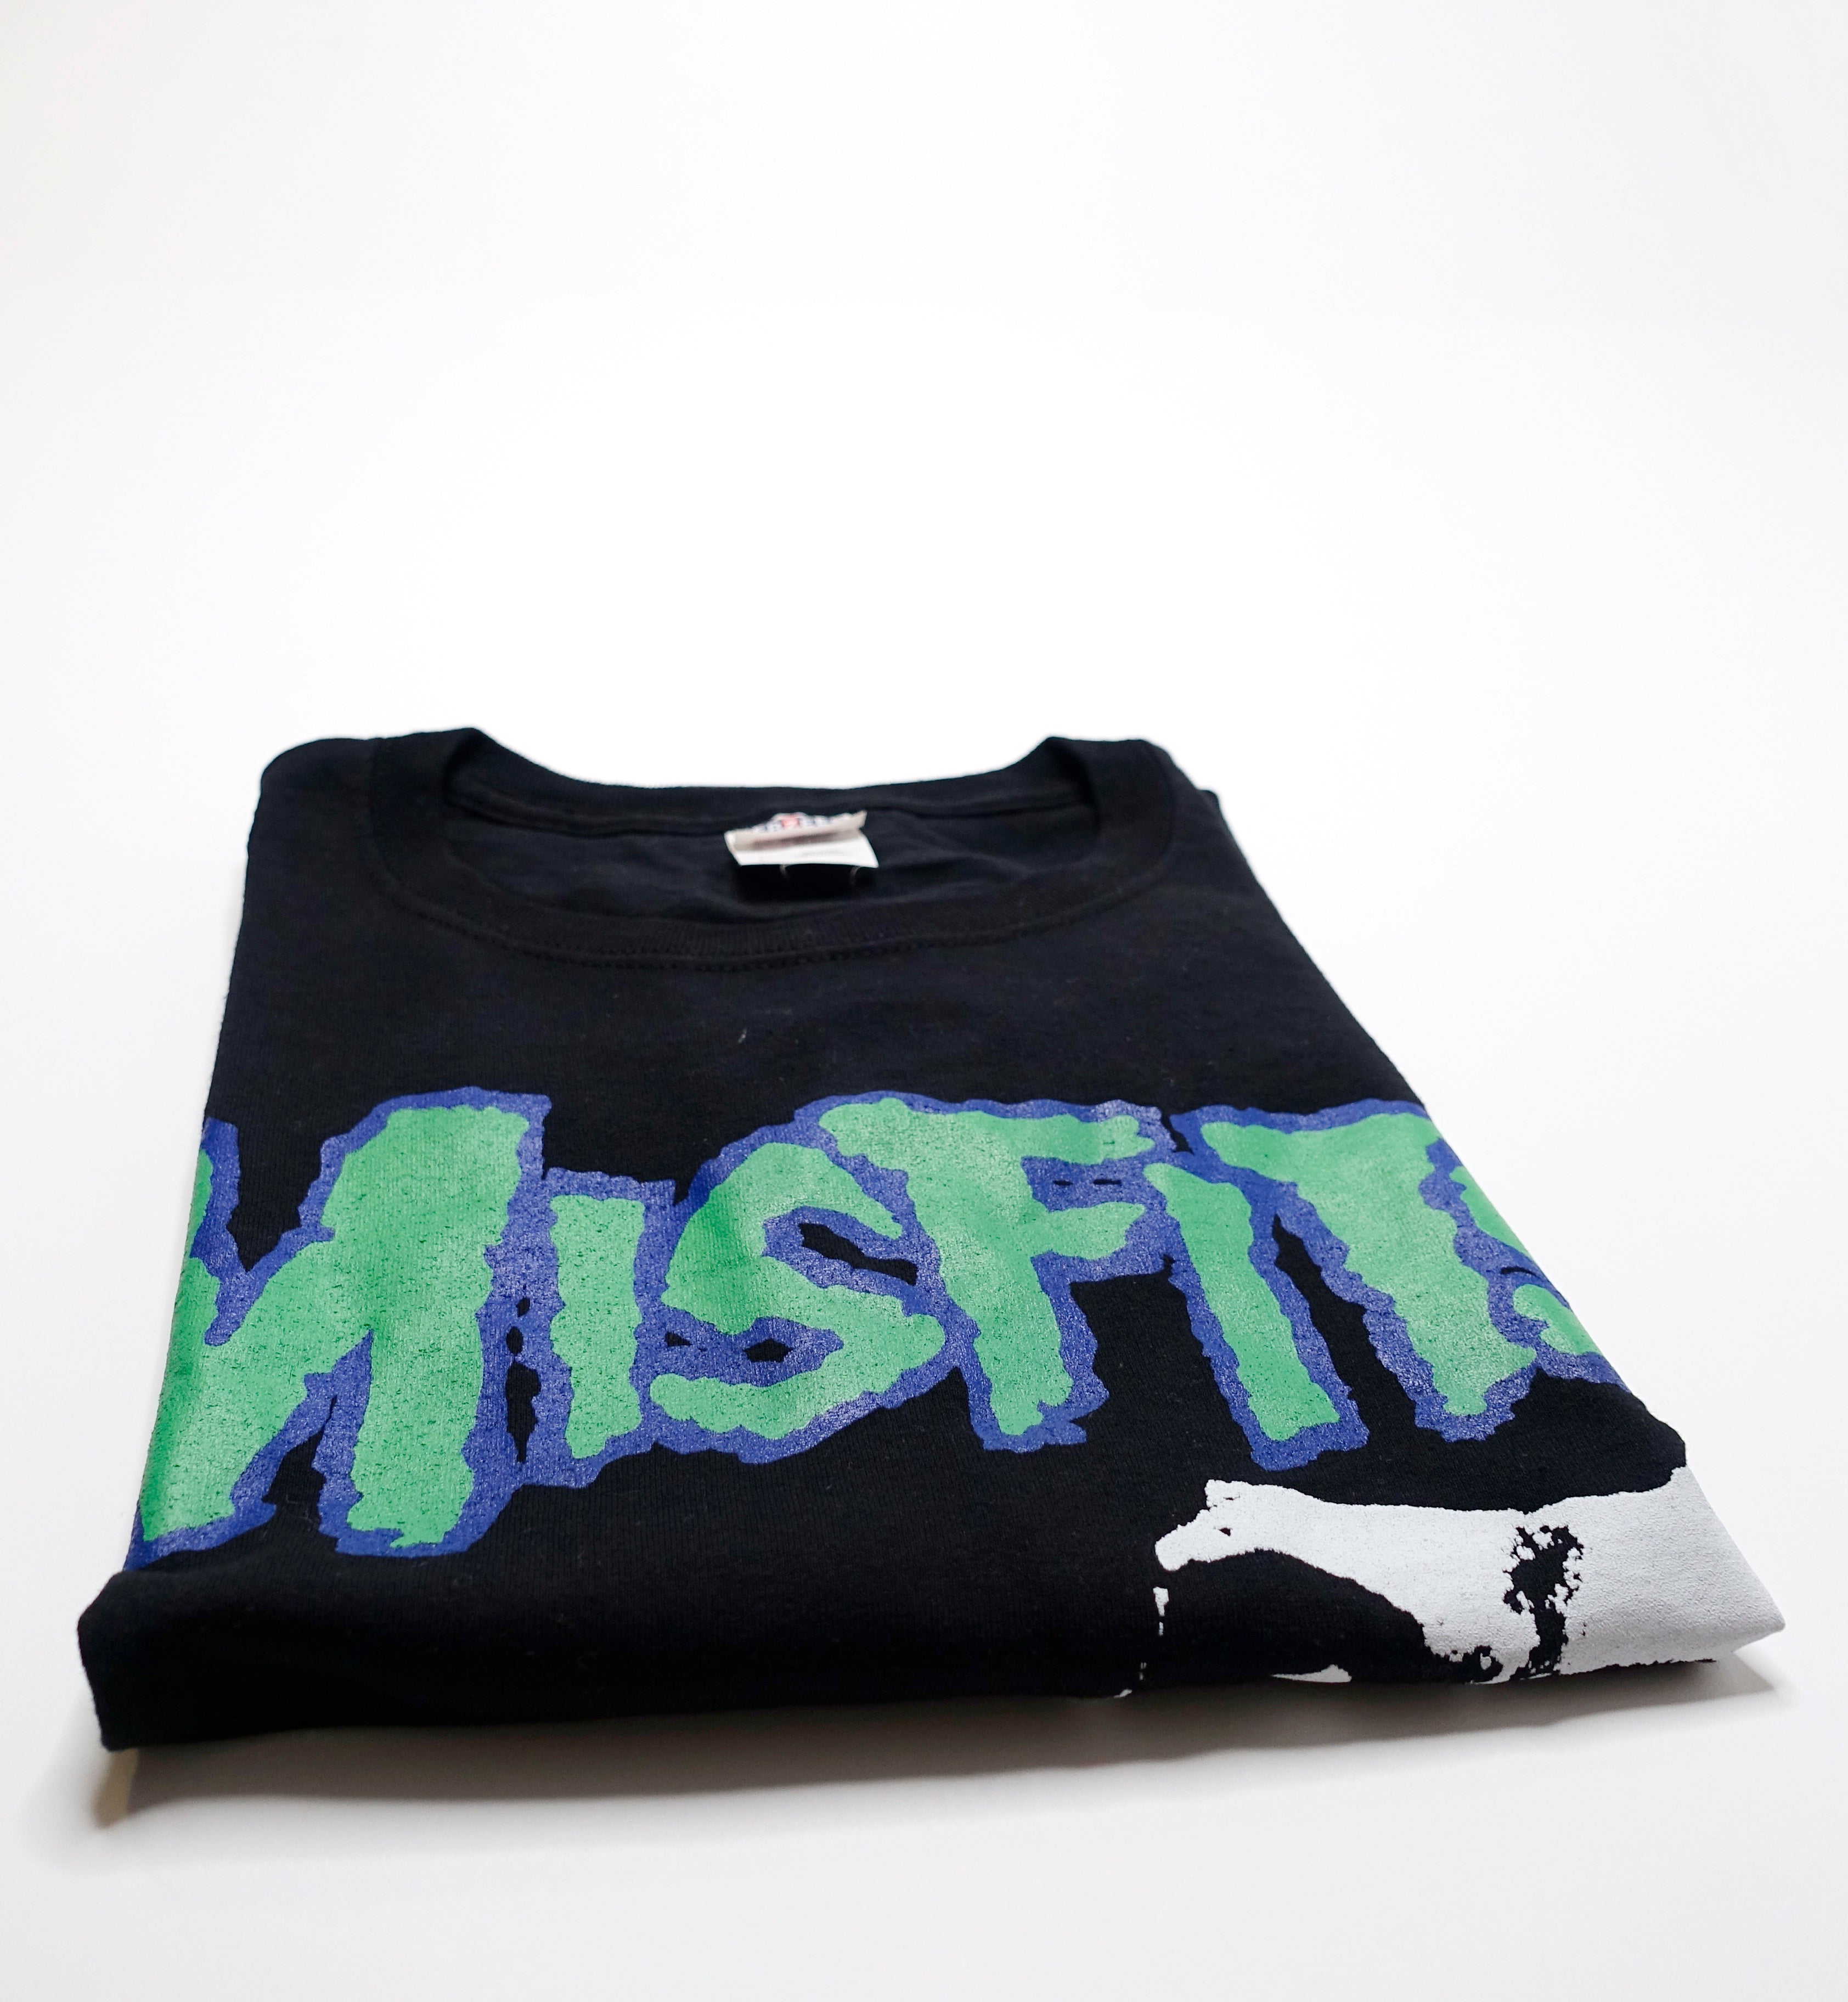 Misfits - Legacy Of Brutality Shirt Size Large (Bootleg)